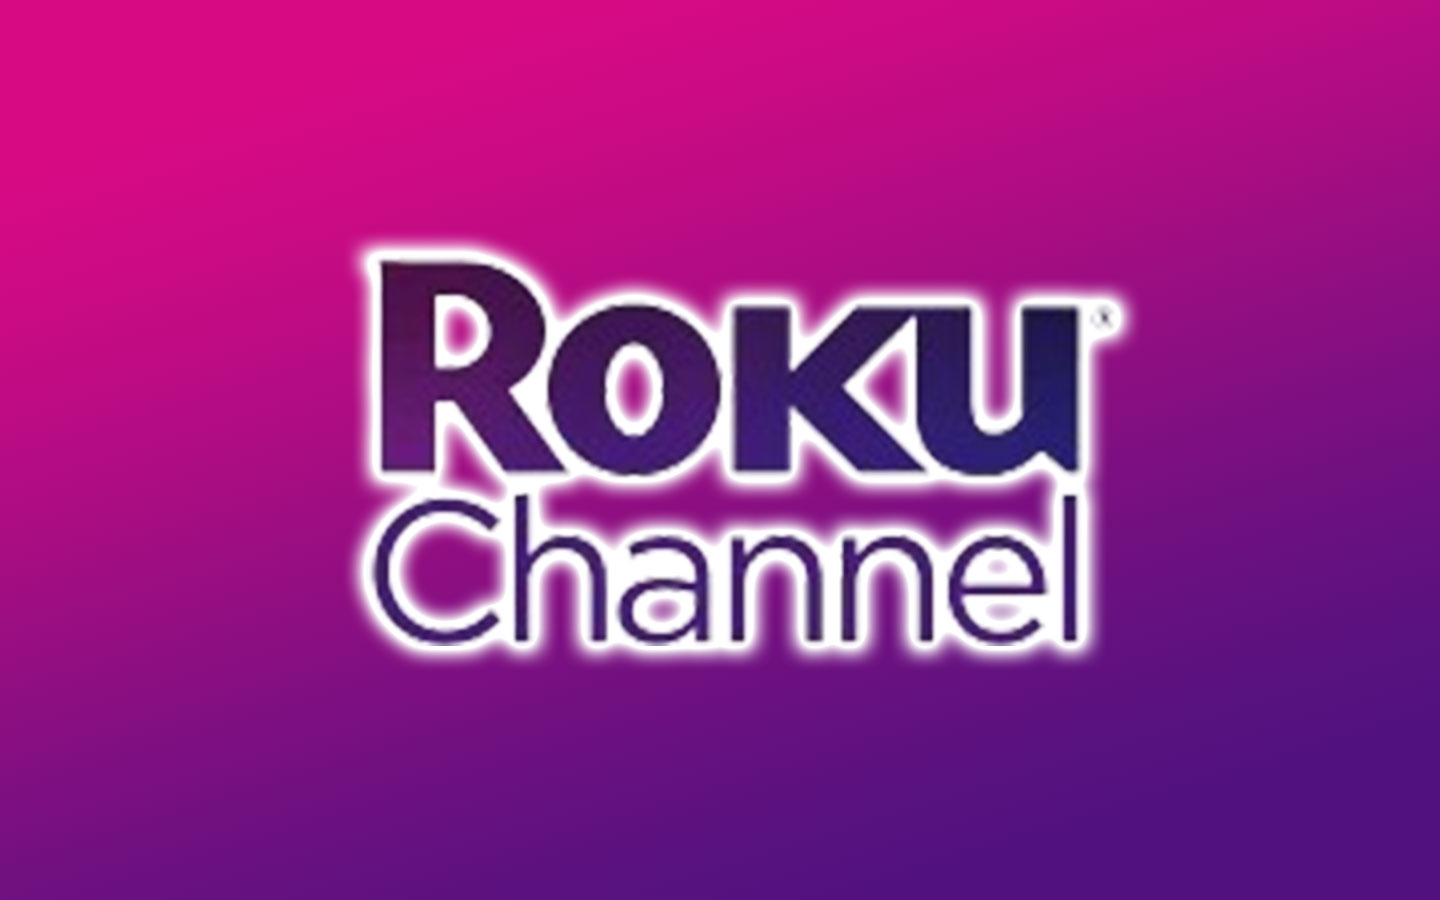 The Roku Channel Free List